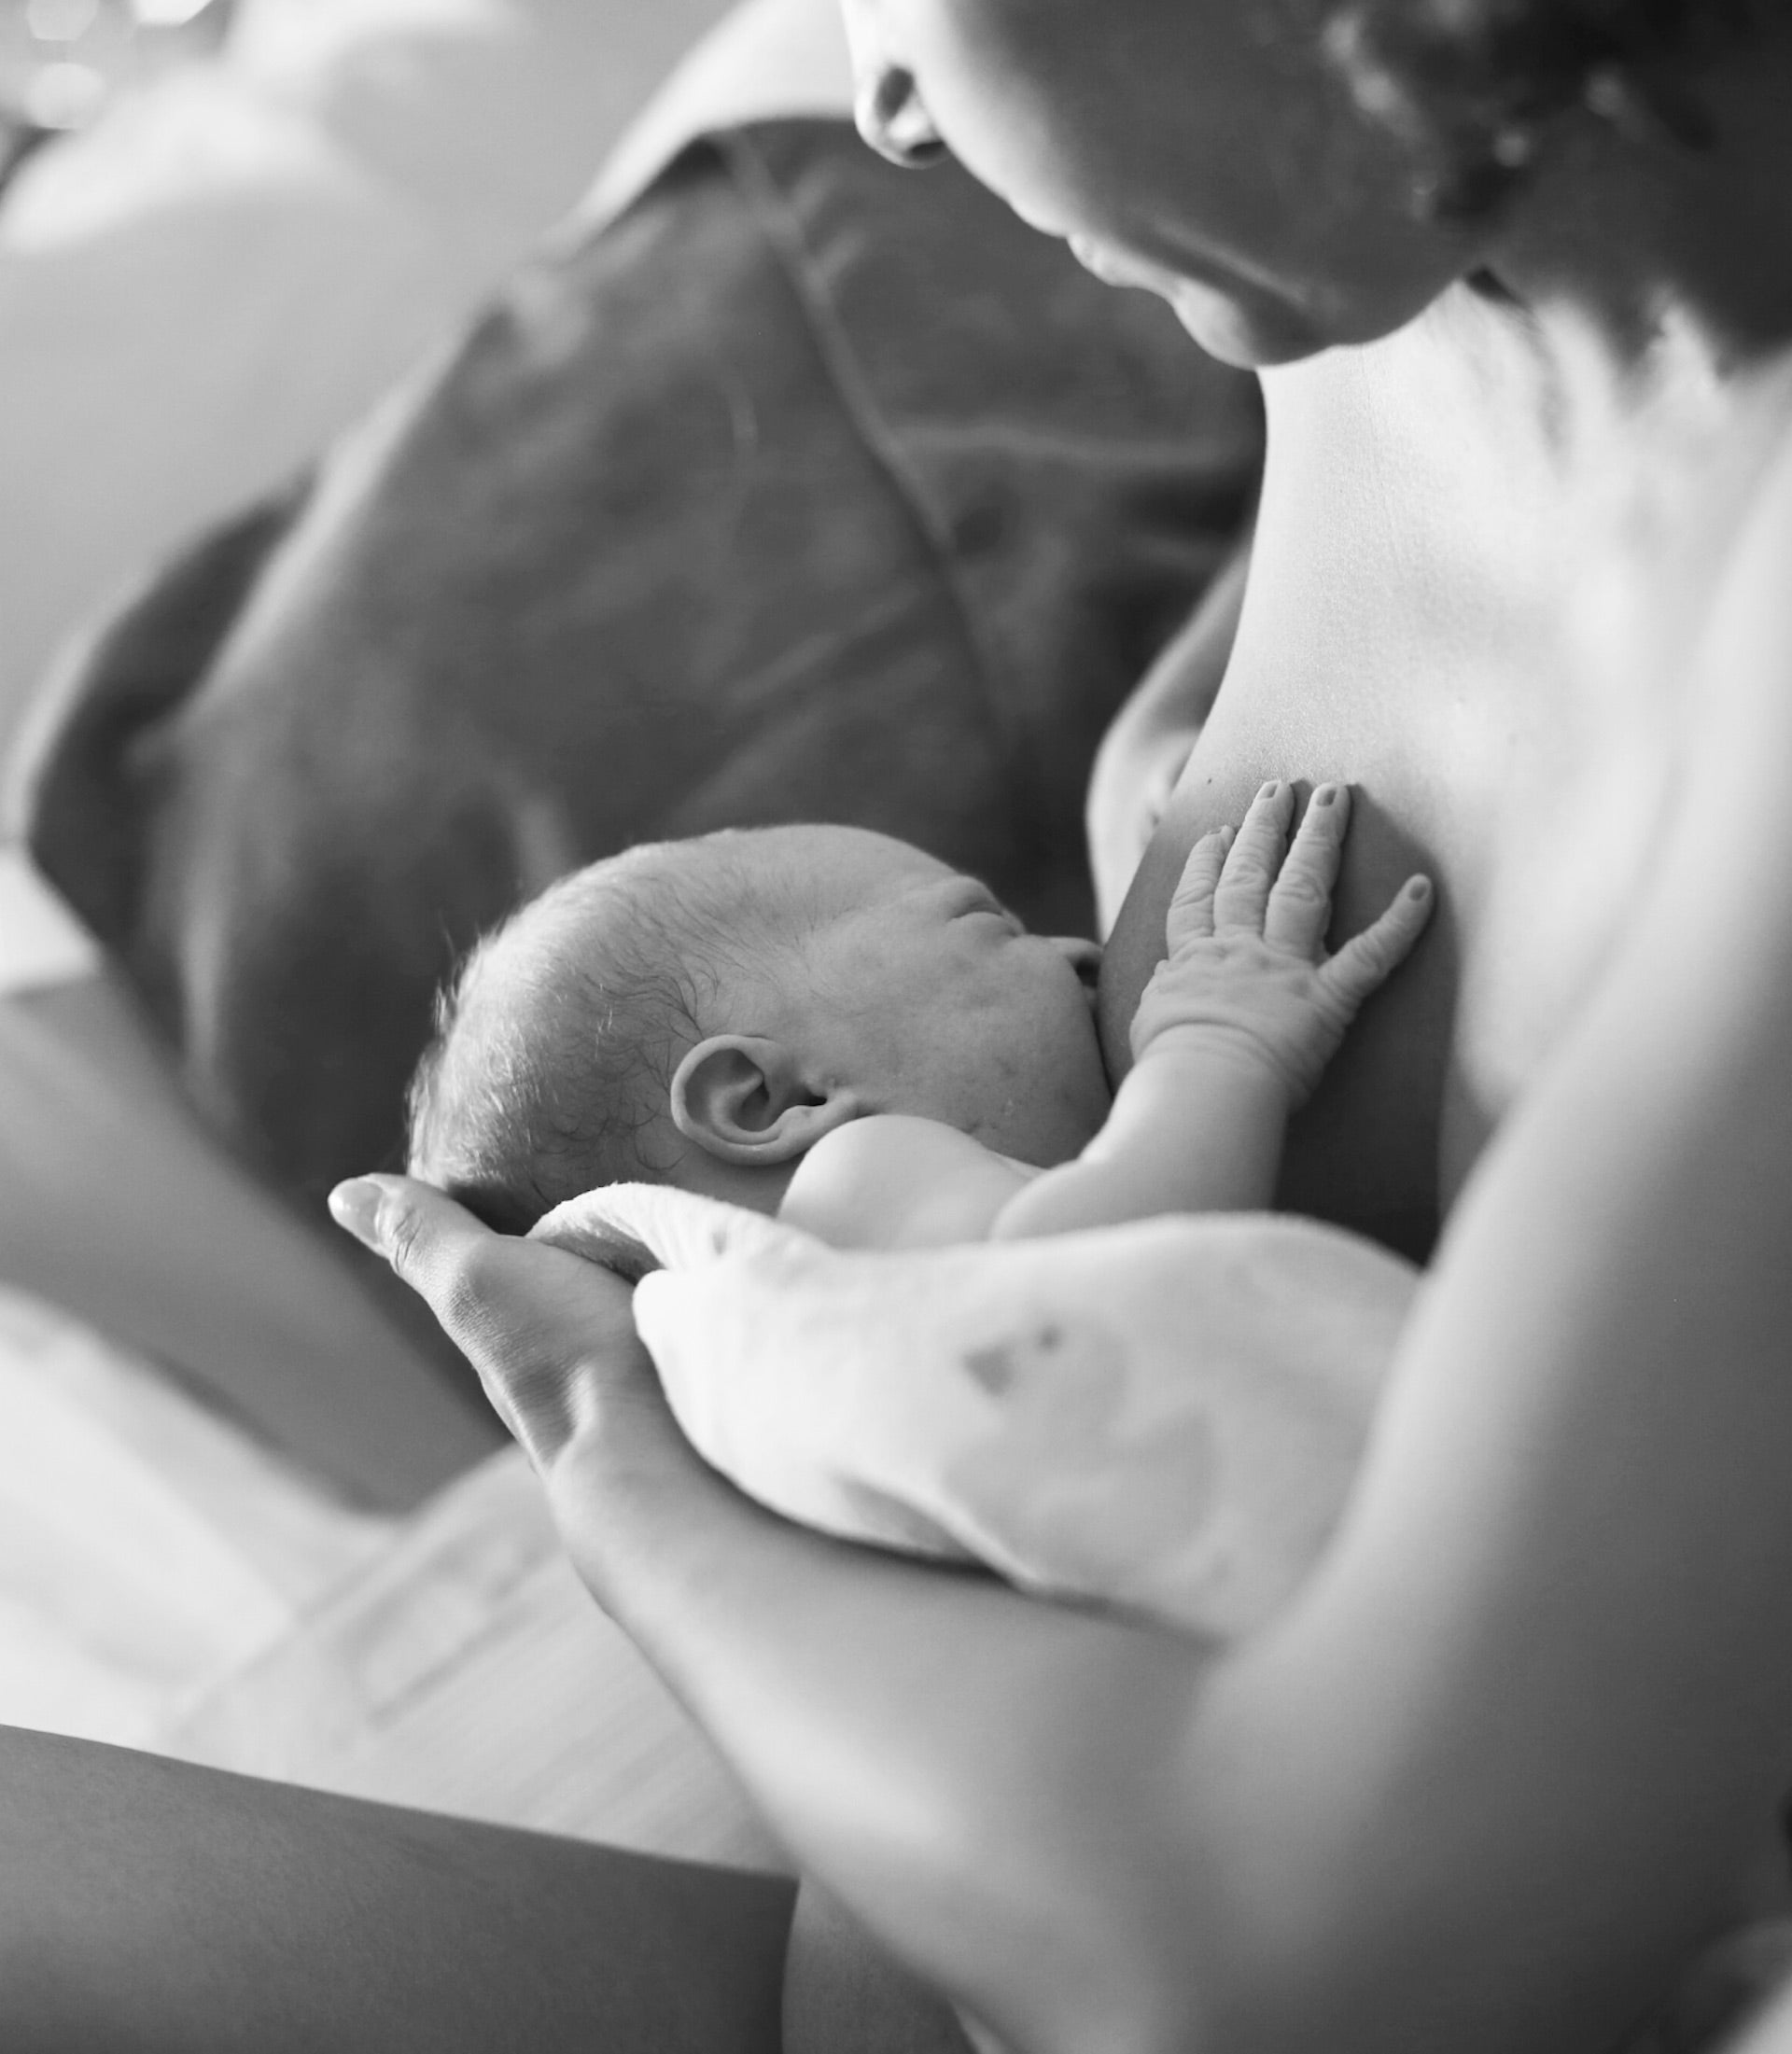 Breastfeeding 101  WIC Breastfeeding Support